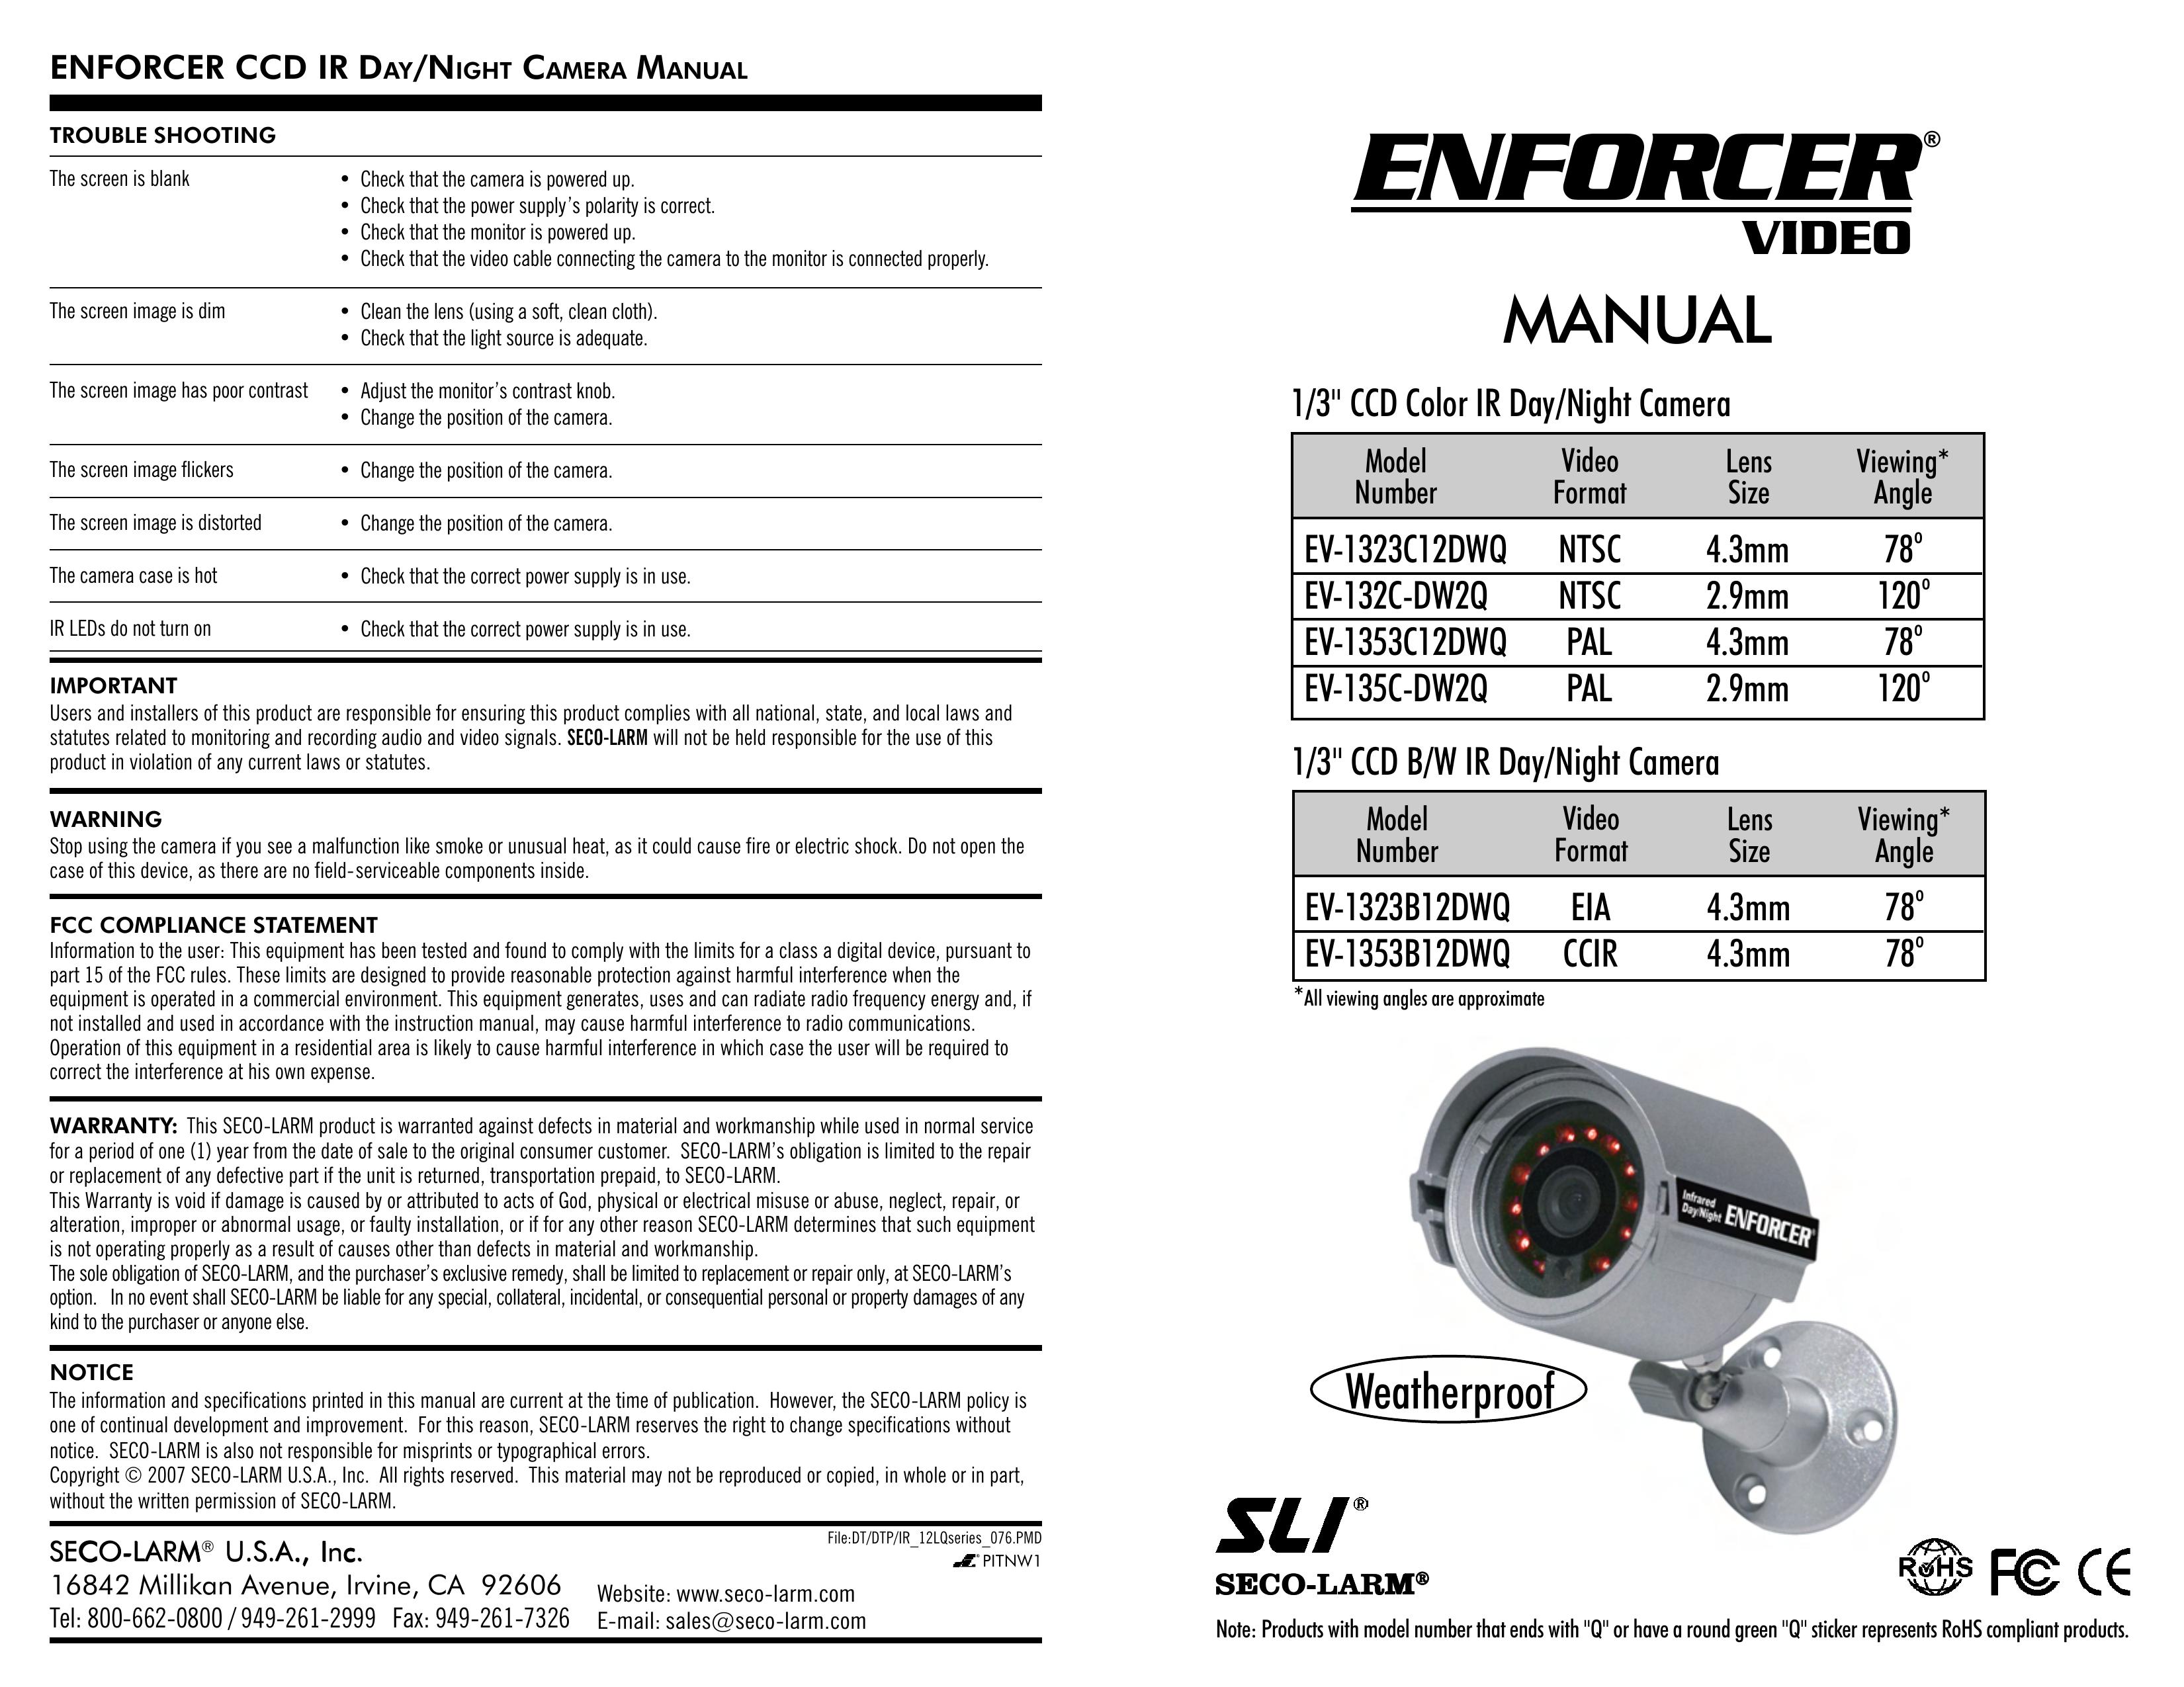 SECO-LARM USA EV-1323C12DWQ Security Camera User Manual